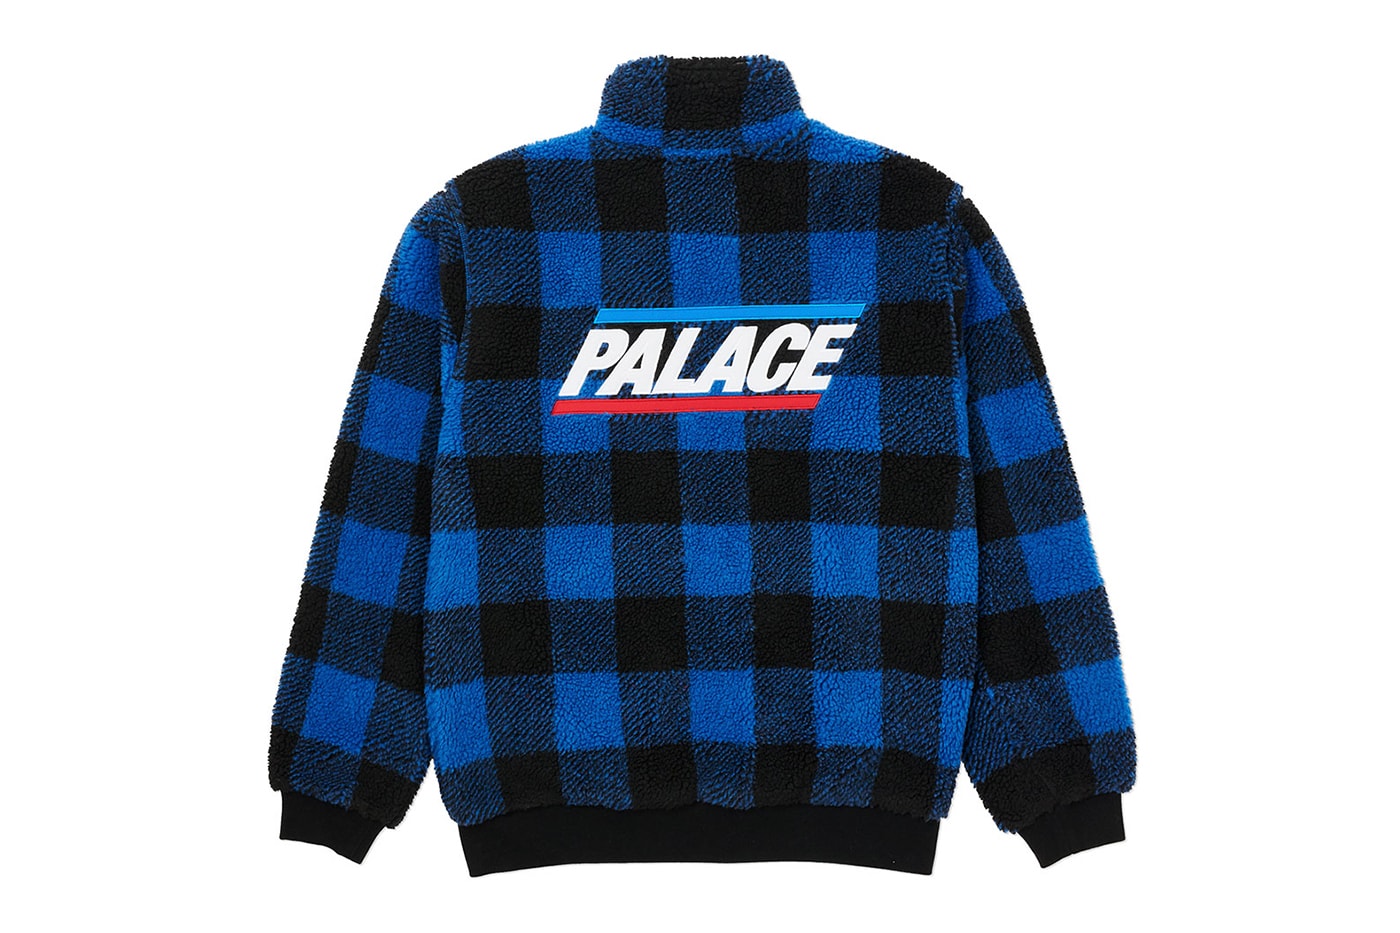 Palace Skateboards Winter 2020 Week 7 Drop List Jacket Sweater Crewneck Longsleeve Bottoms Hat Cap Beanie